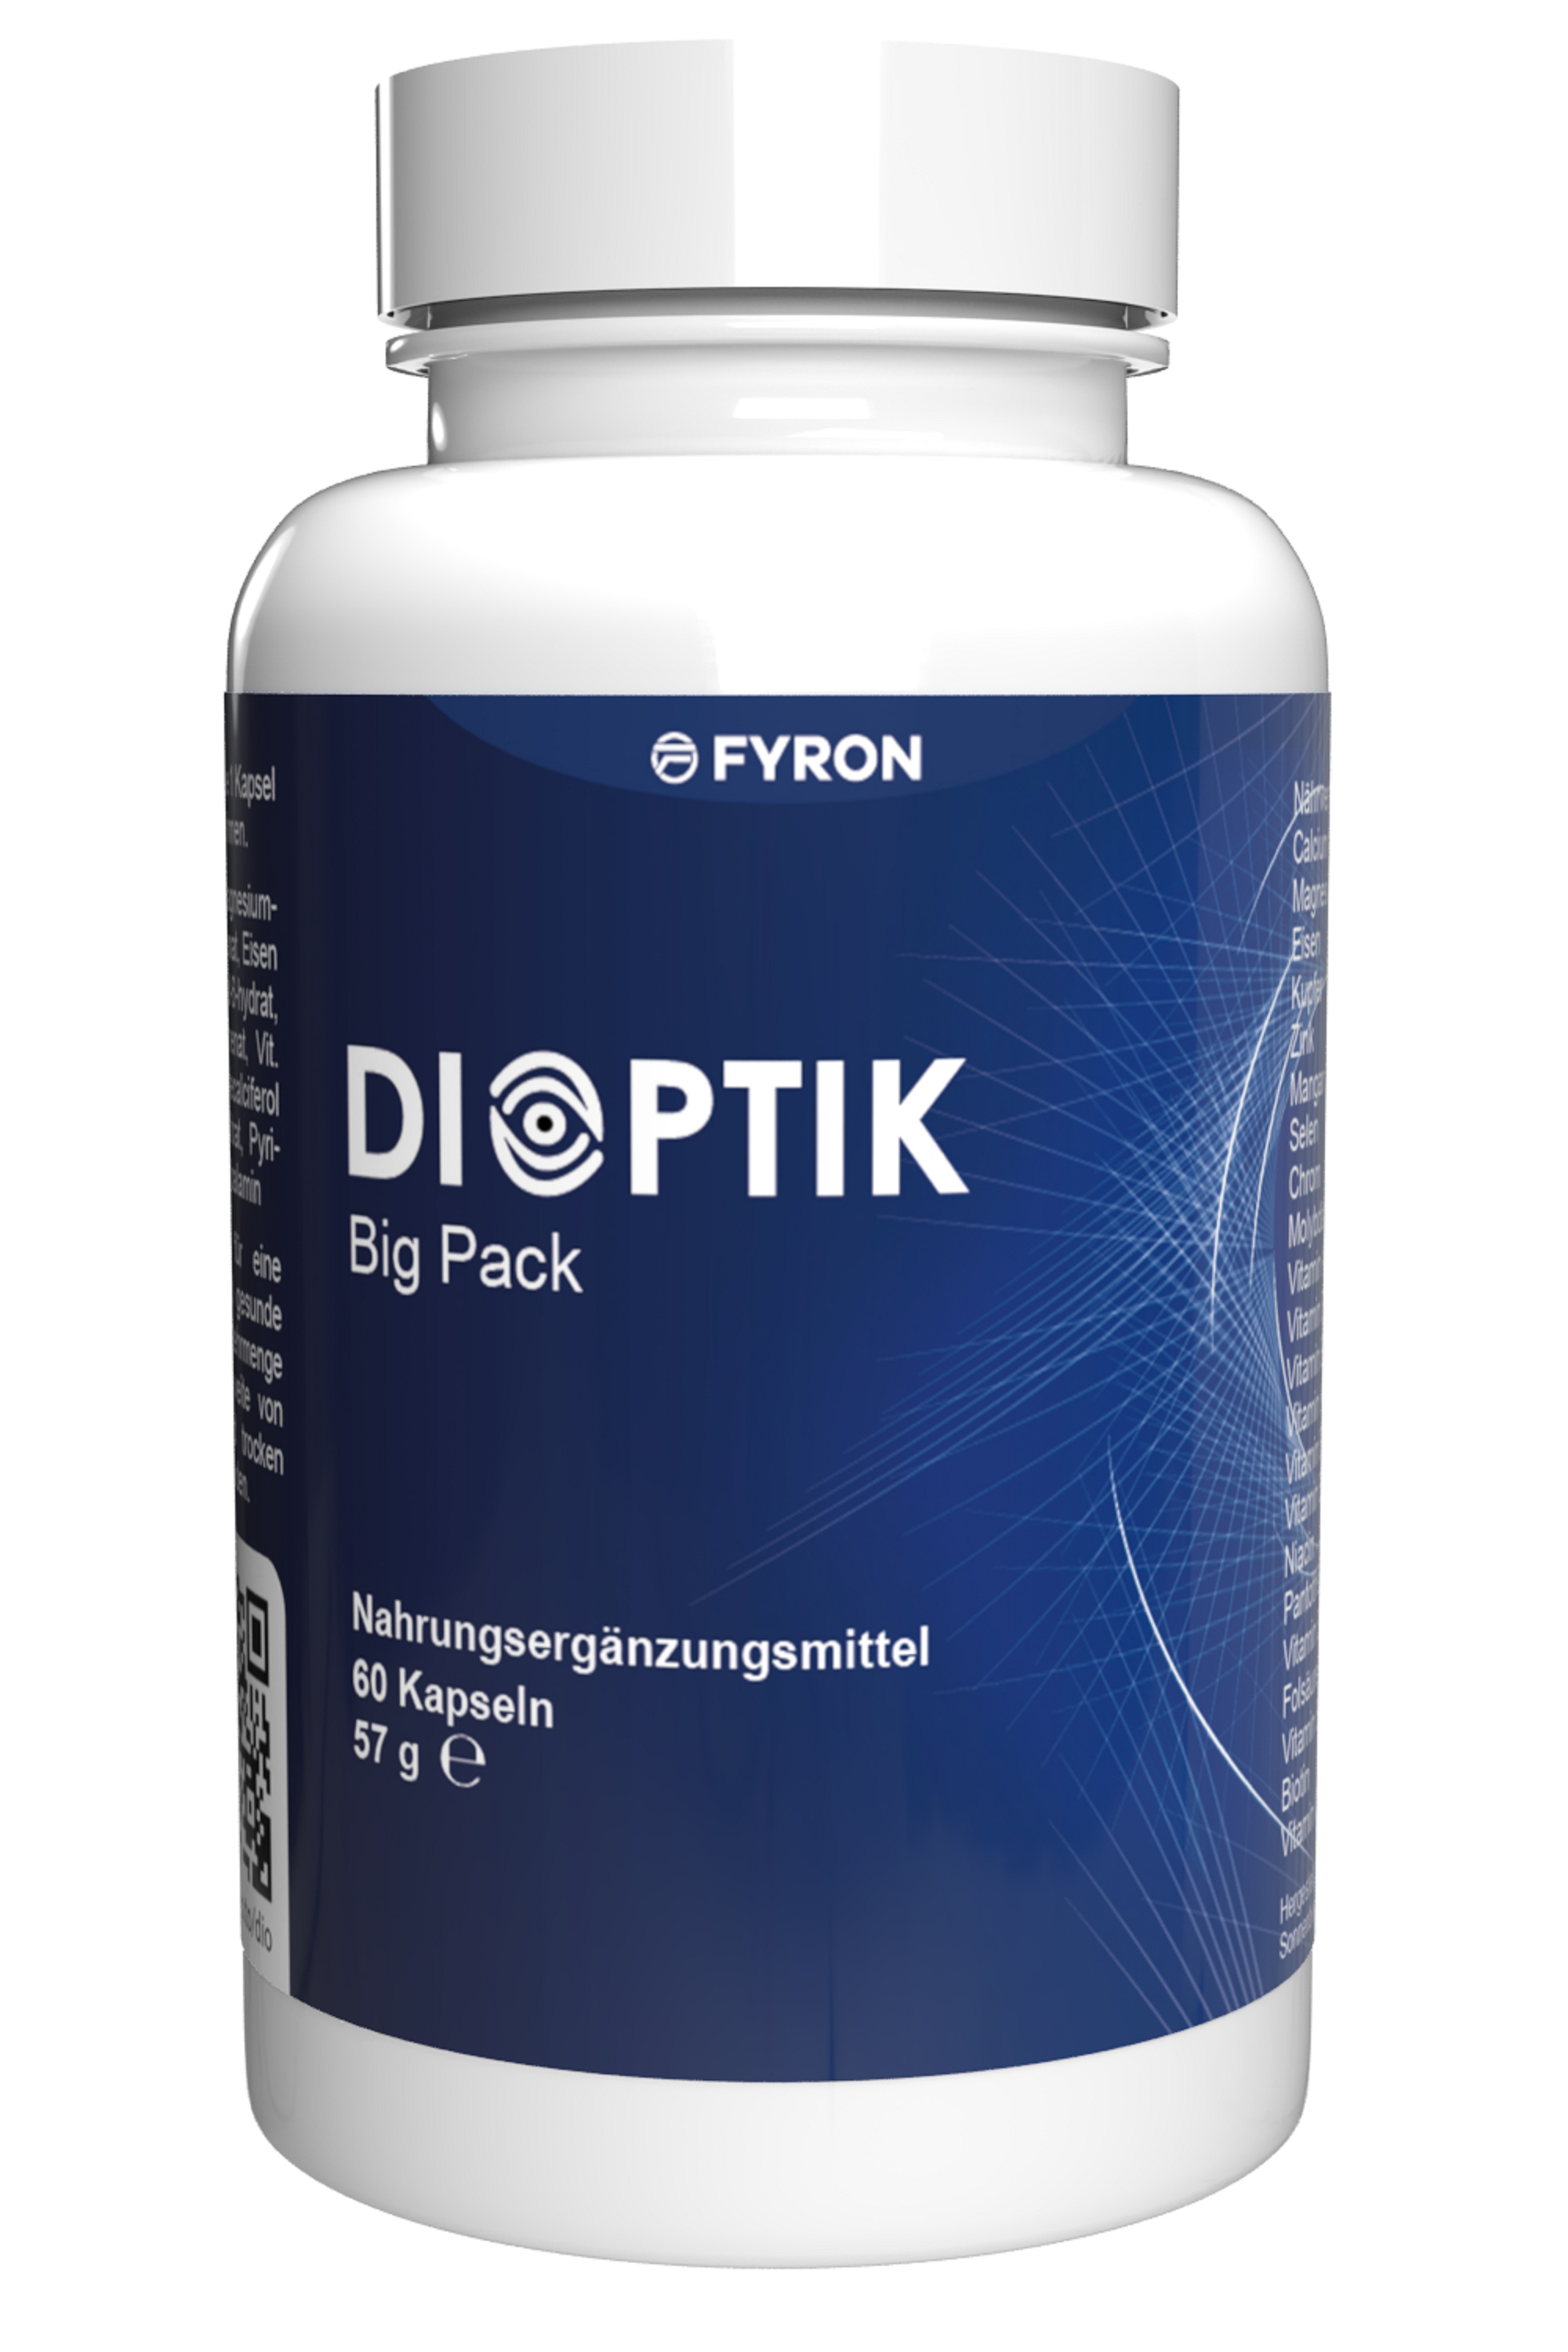 Dioptik - 60 Kapseln Nahrungsergänzungsmittel